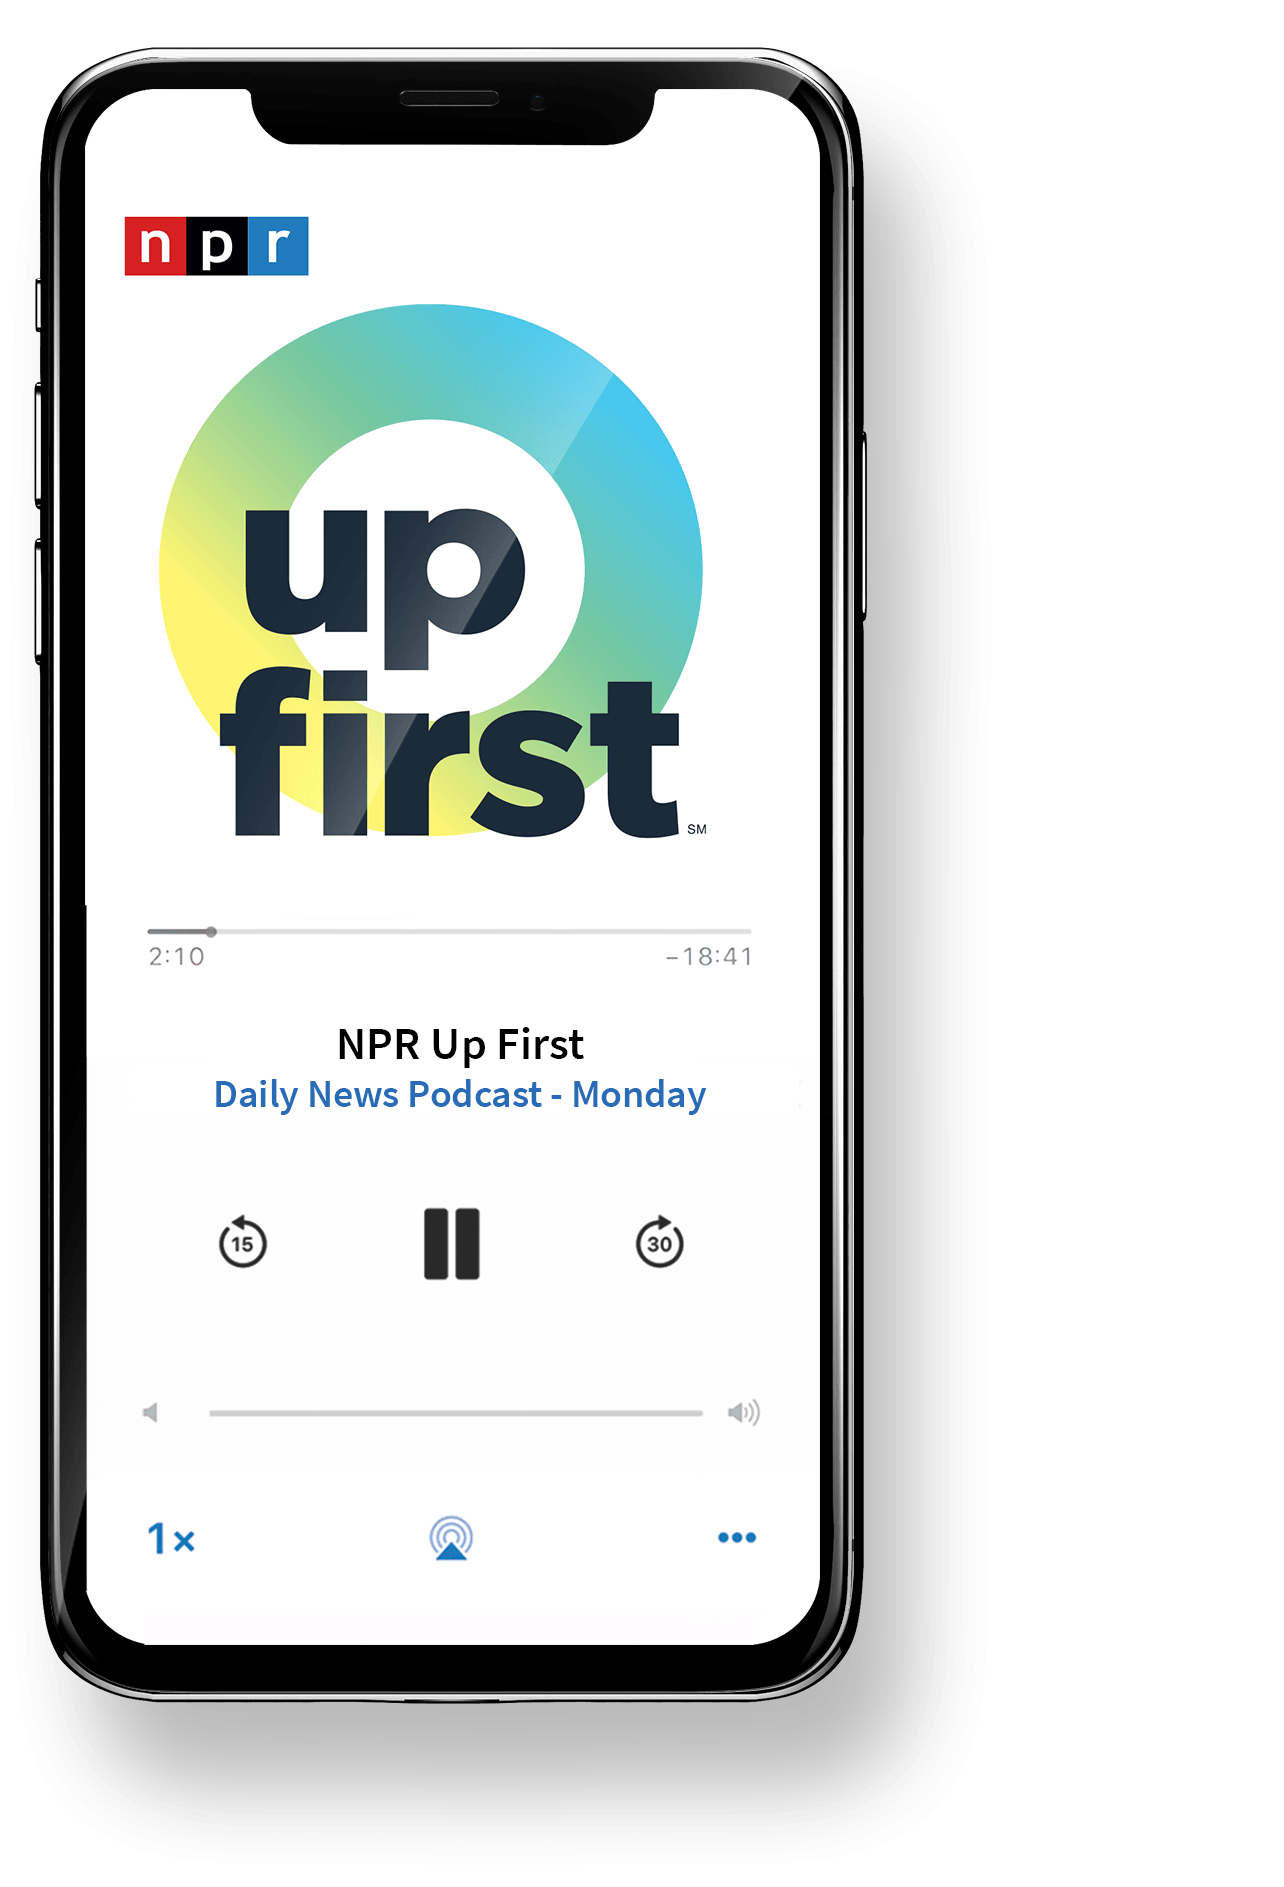 NPR Up First Podcast Cover Design